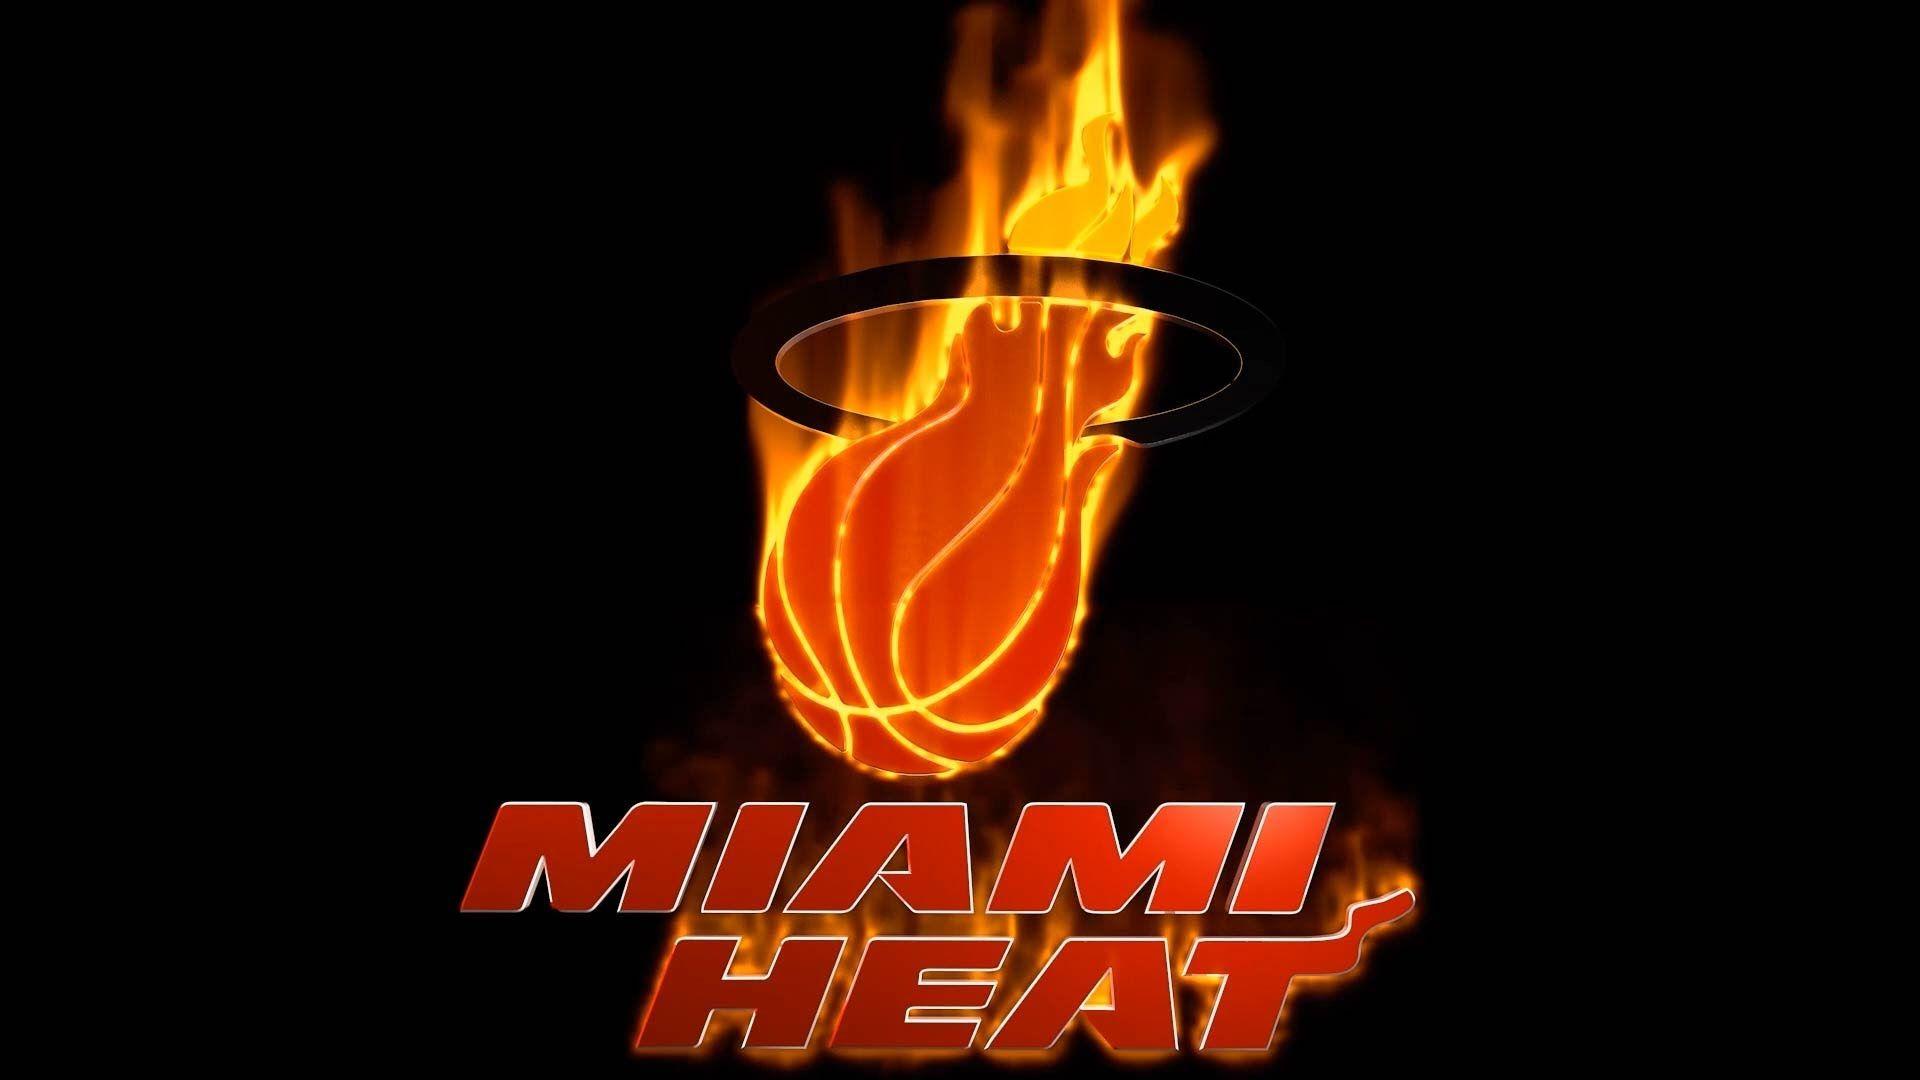 Miami Heat Animated Logo Intro done in Cinema 4d using TurbulenceFd